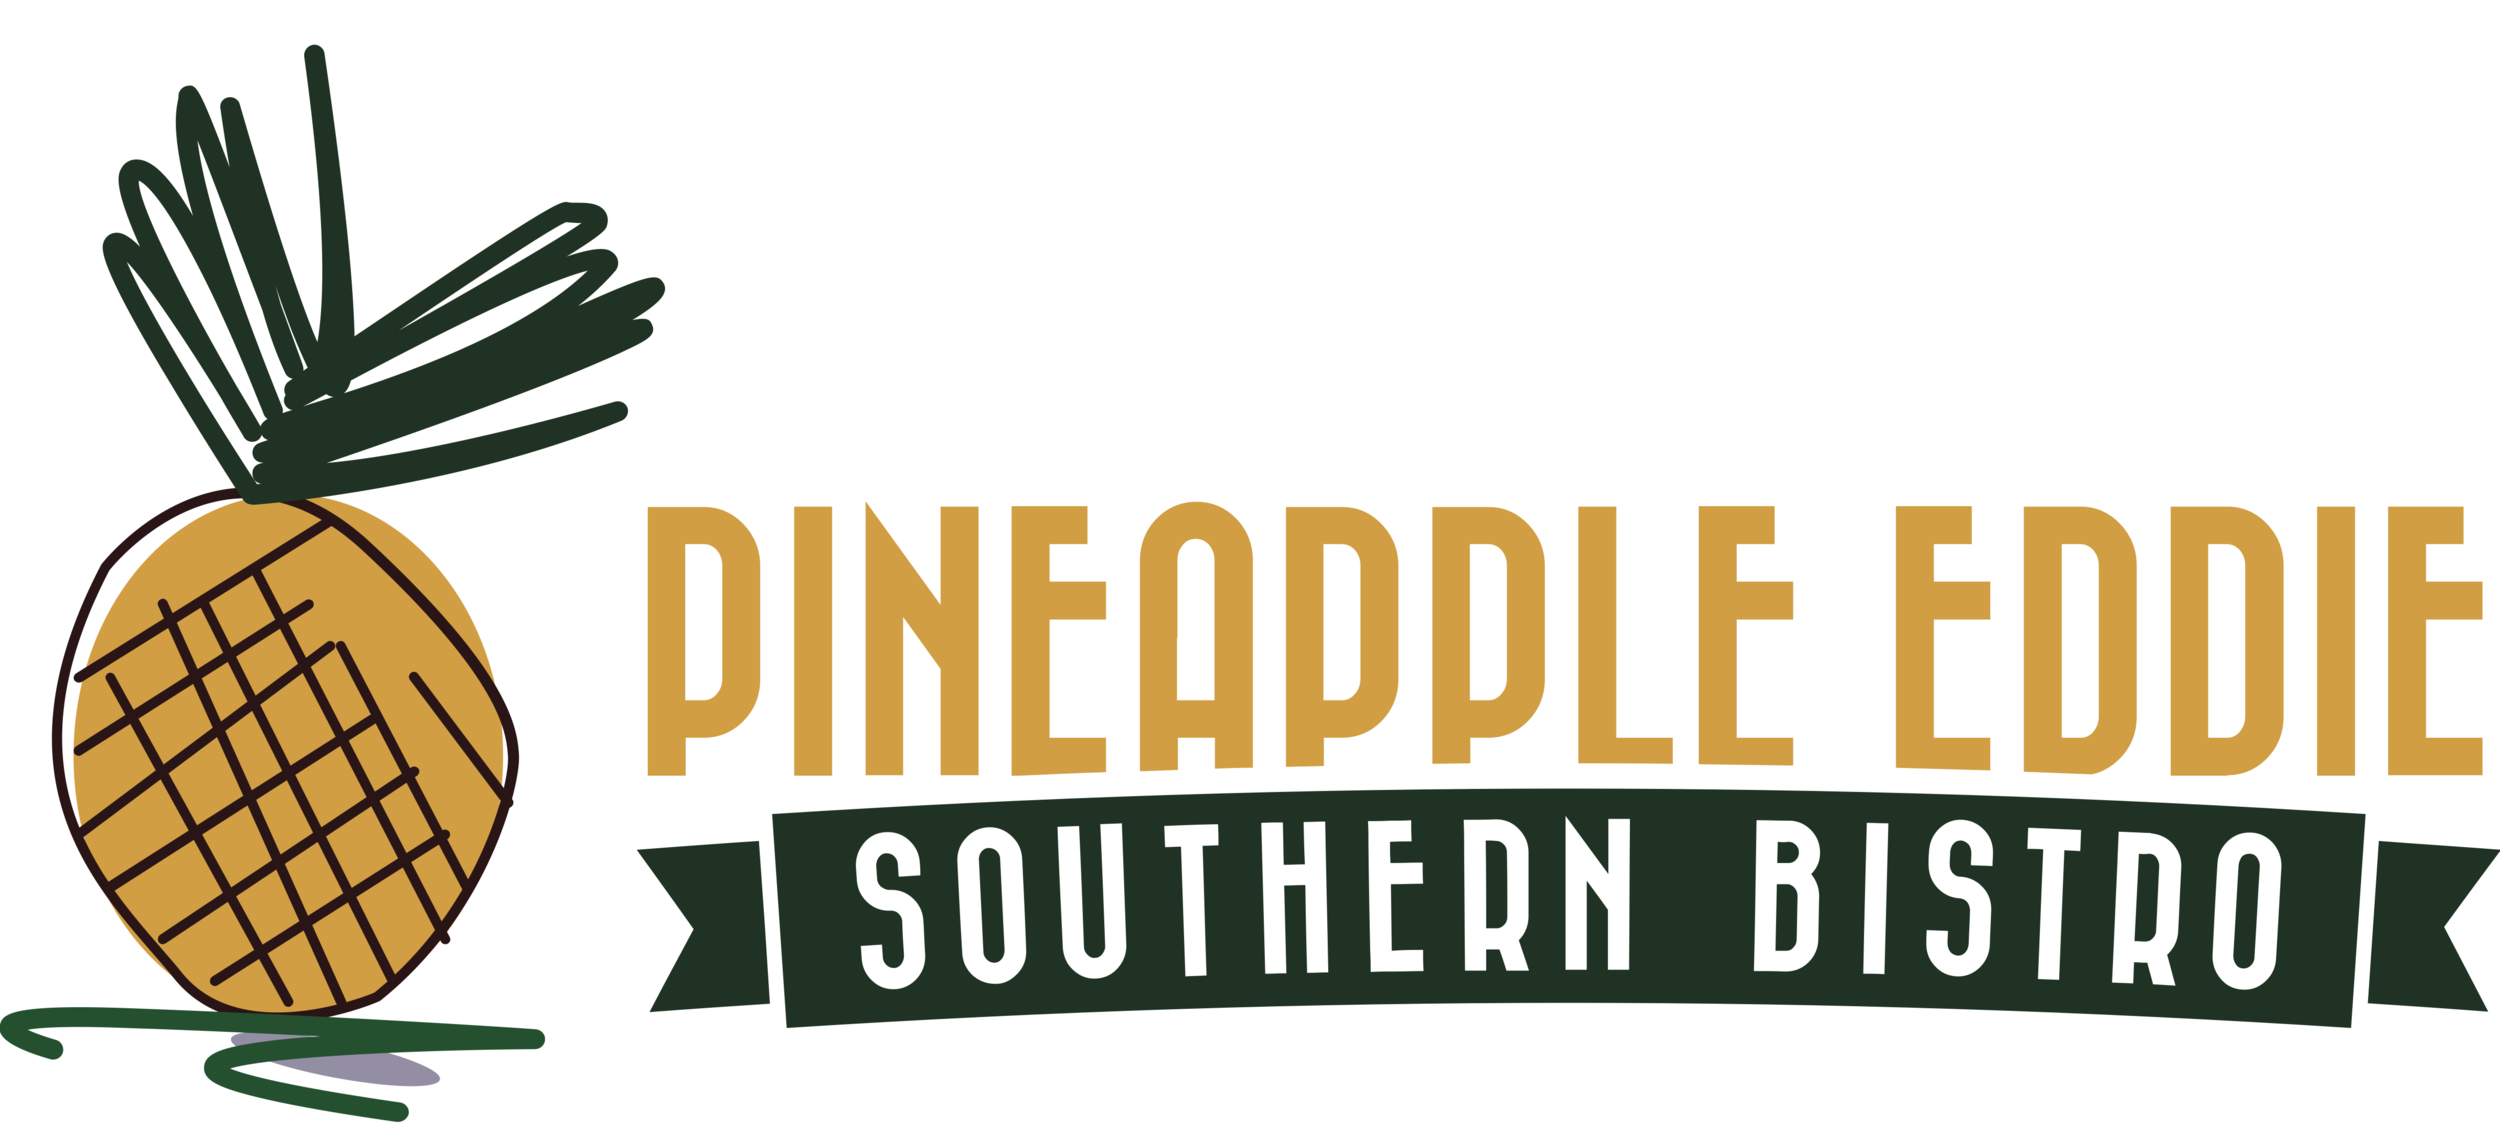 Pineapple Eddies Southern Bistro.png